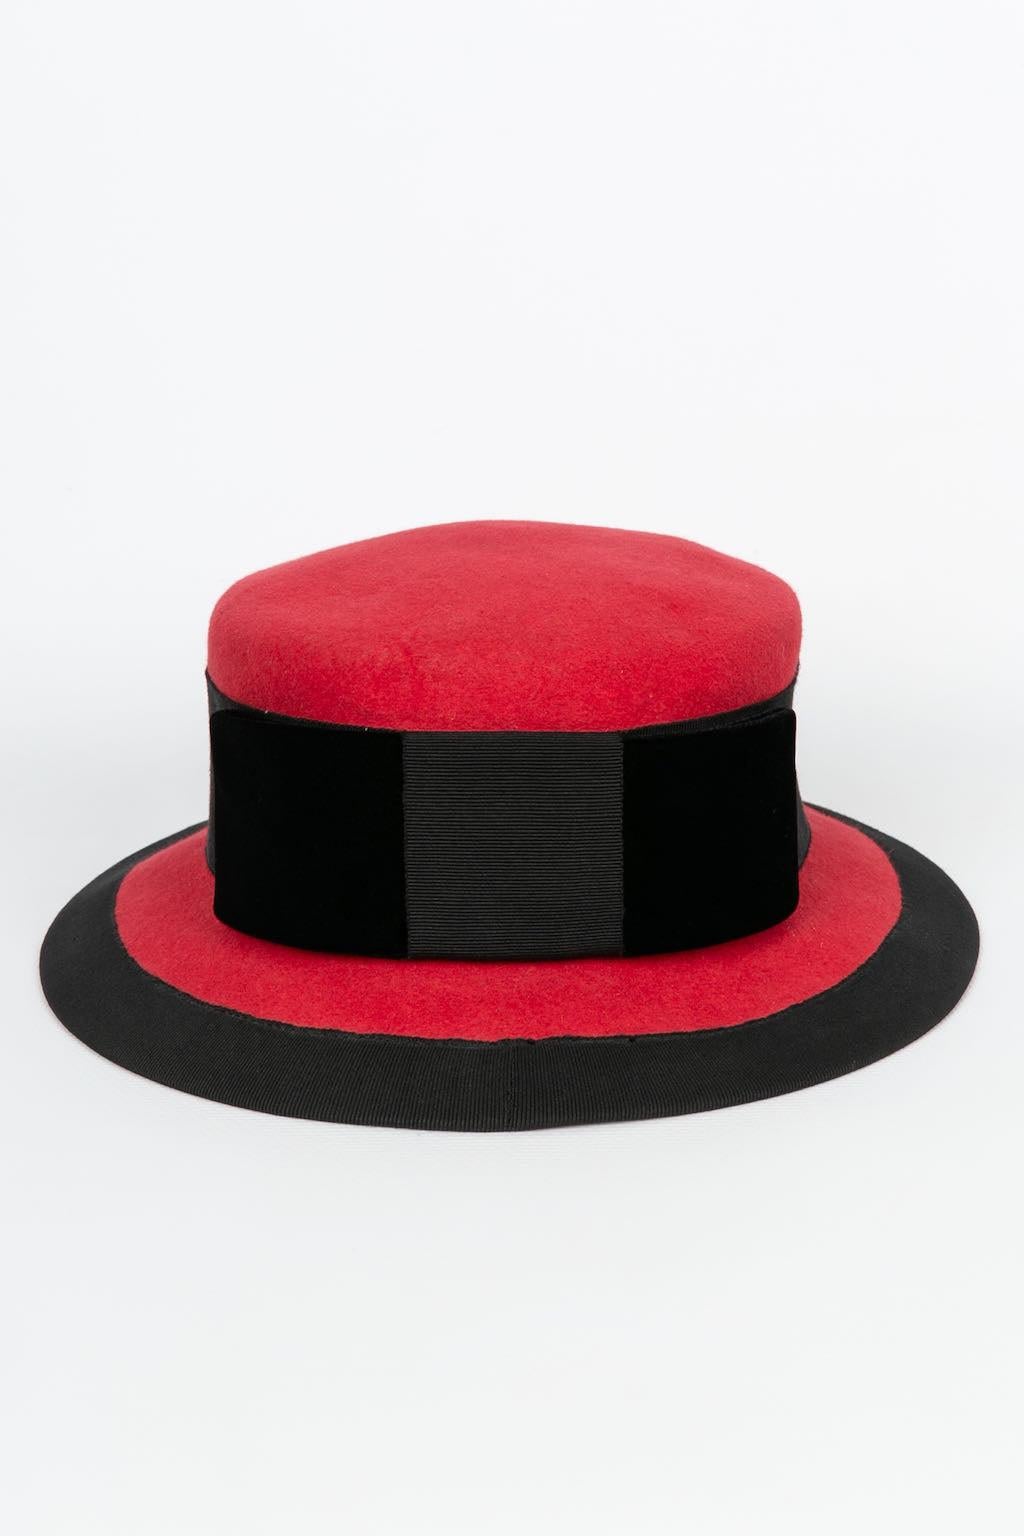 Women's Yves Saint Laurent Red and Black Catwalk Hat